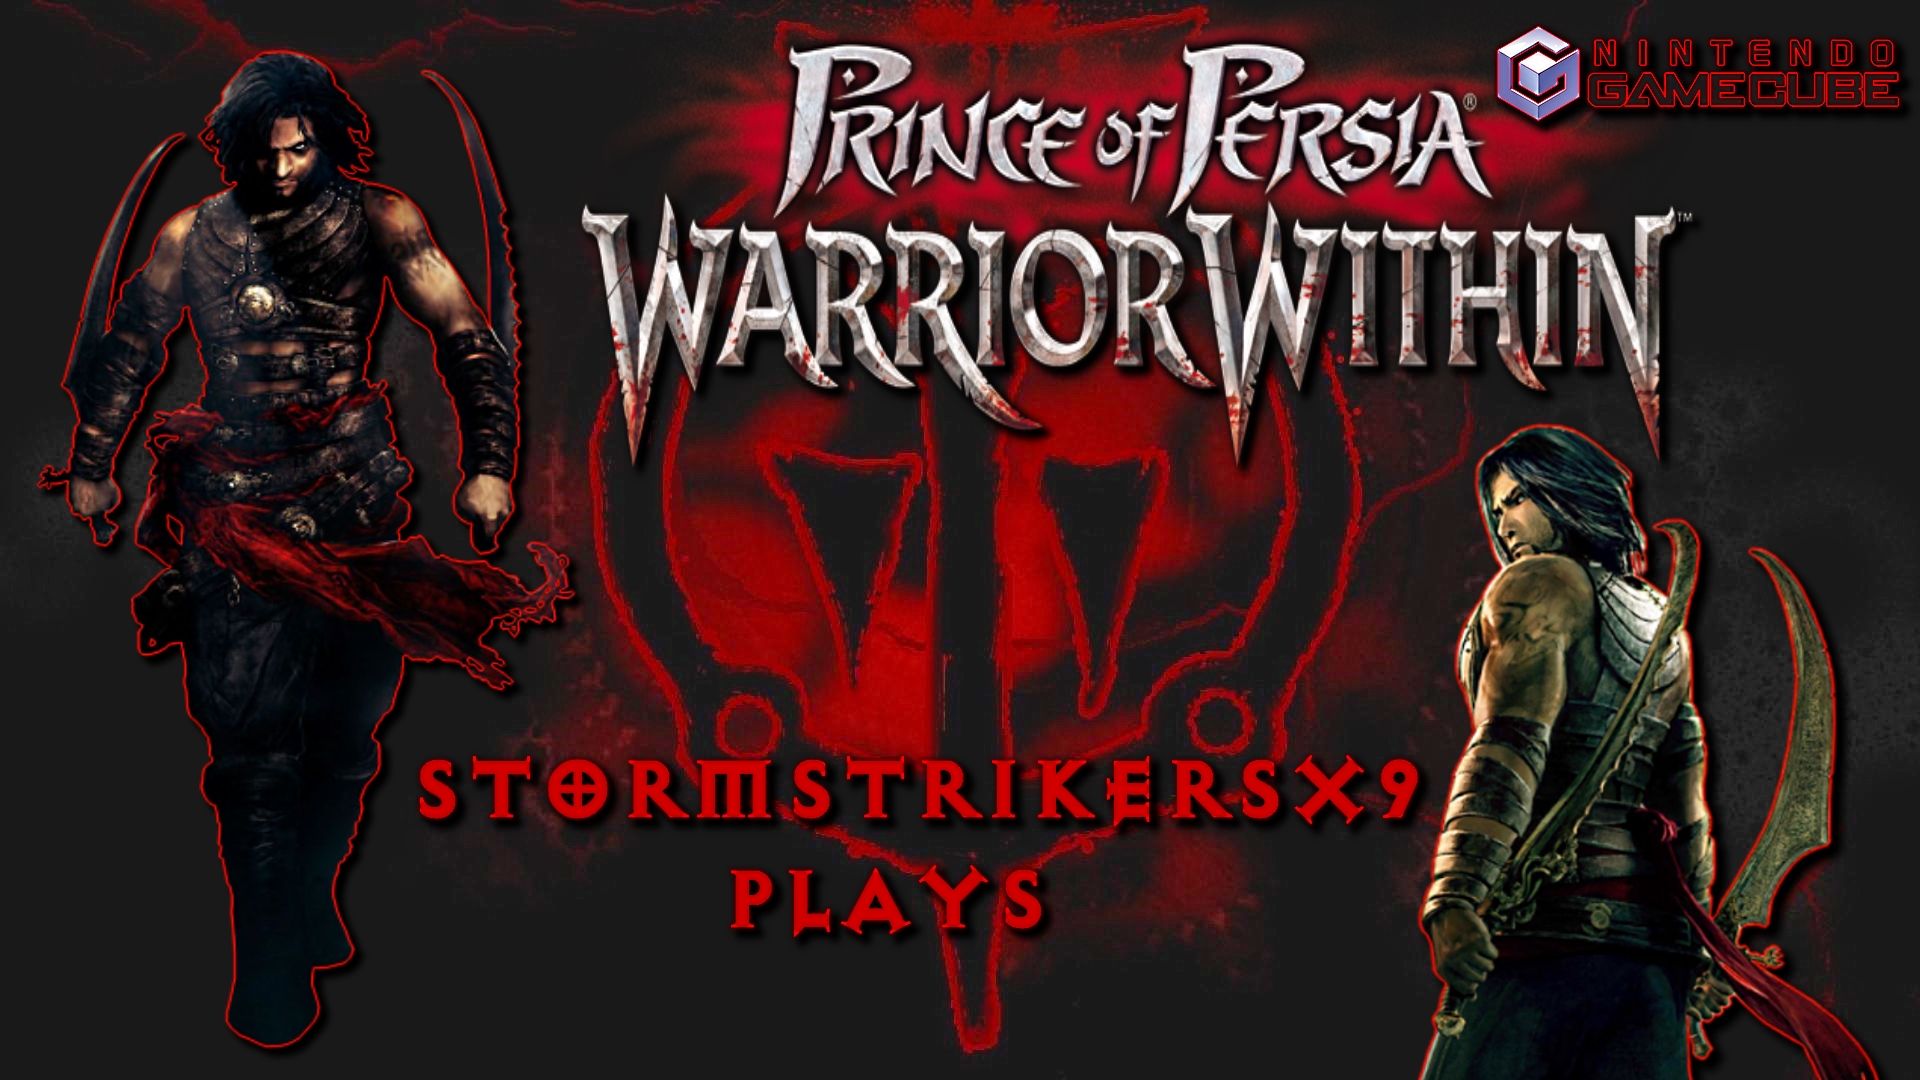 Prince Of Persia: Warrior Within, Nintendo GameCube